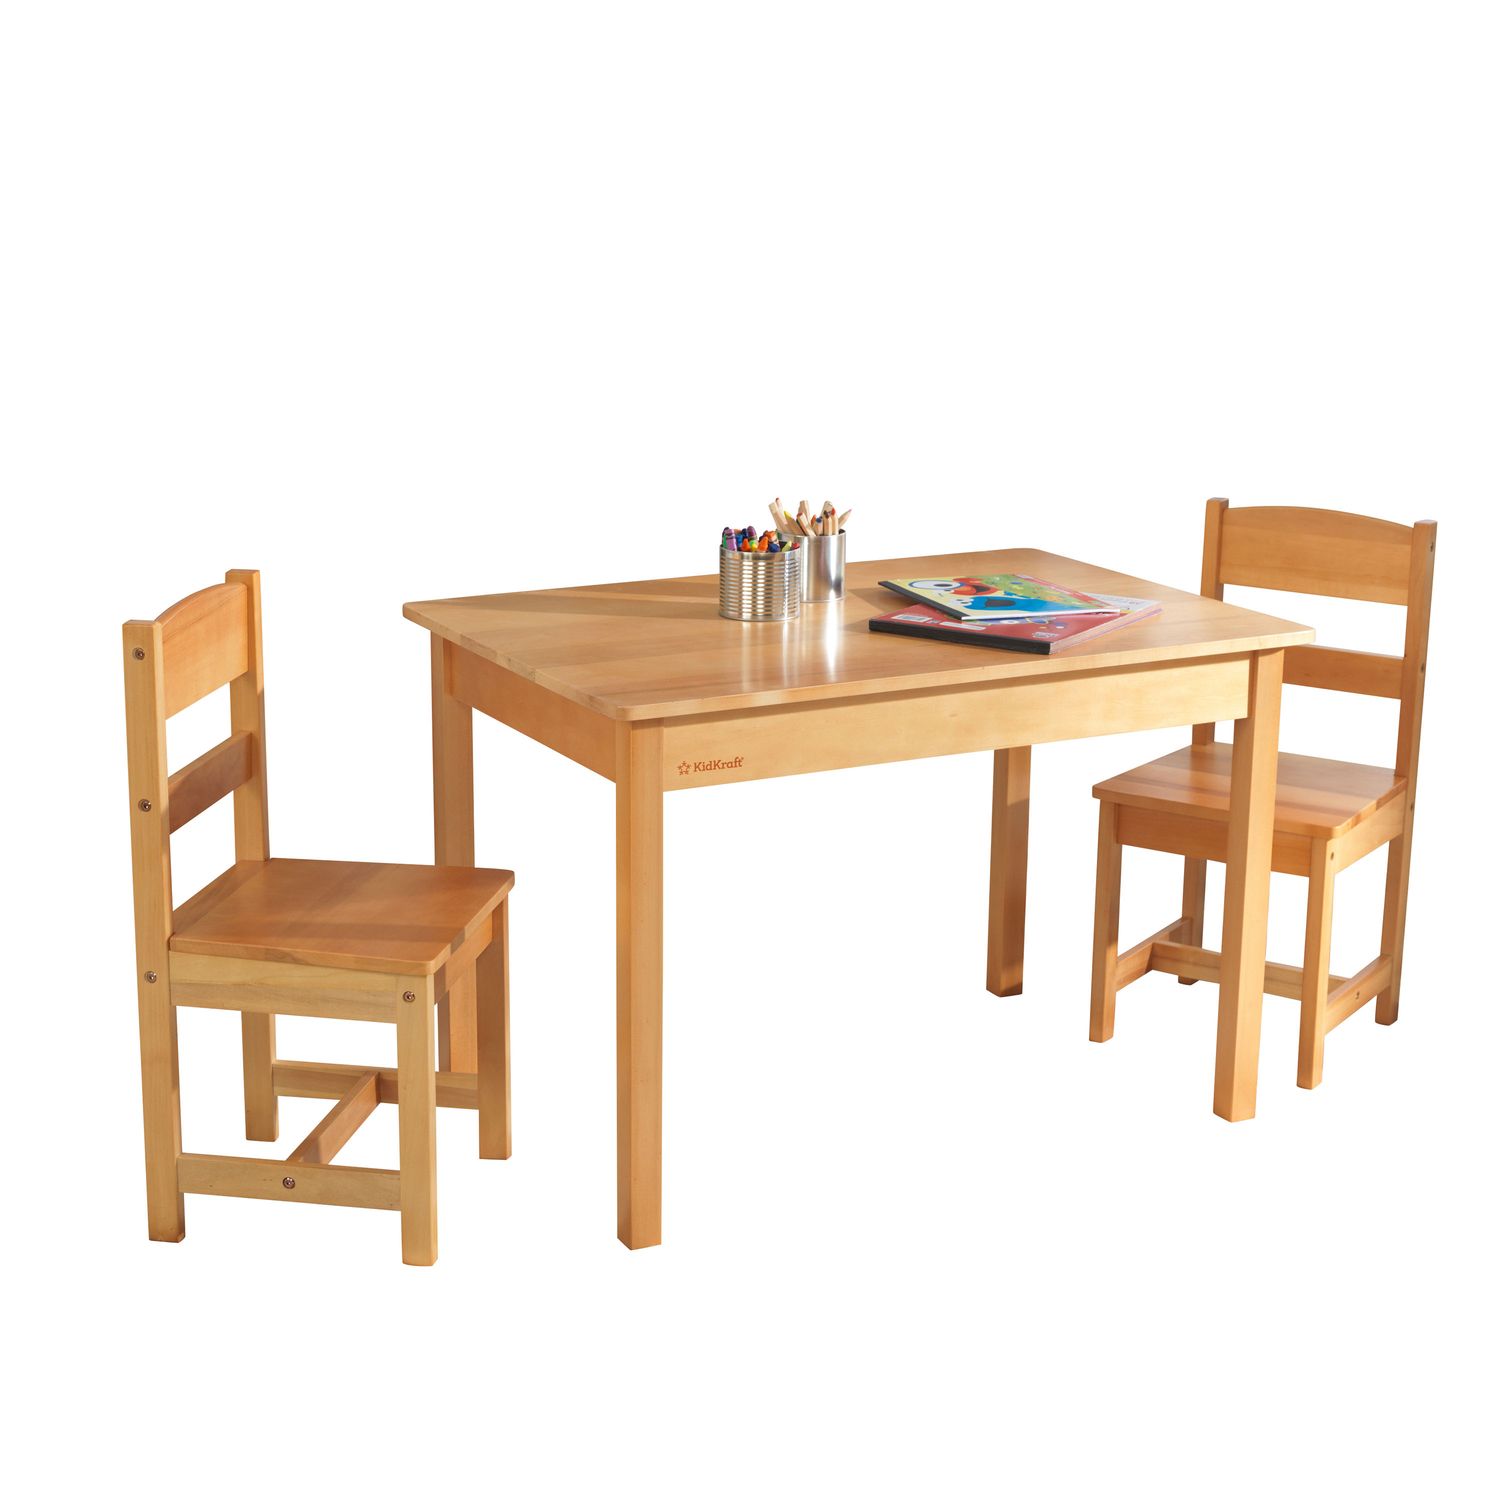 kidkraft rectangle table & 2 chair set